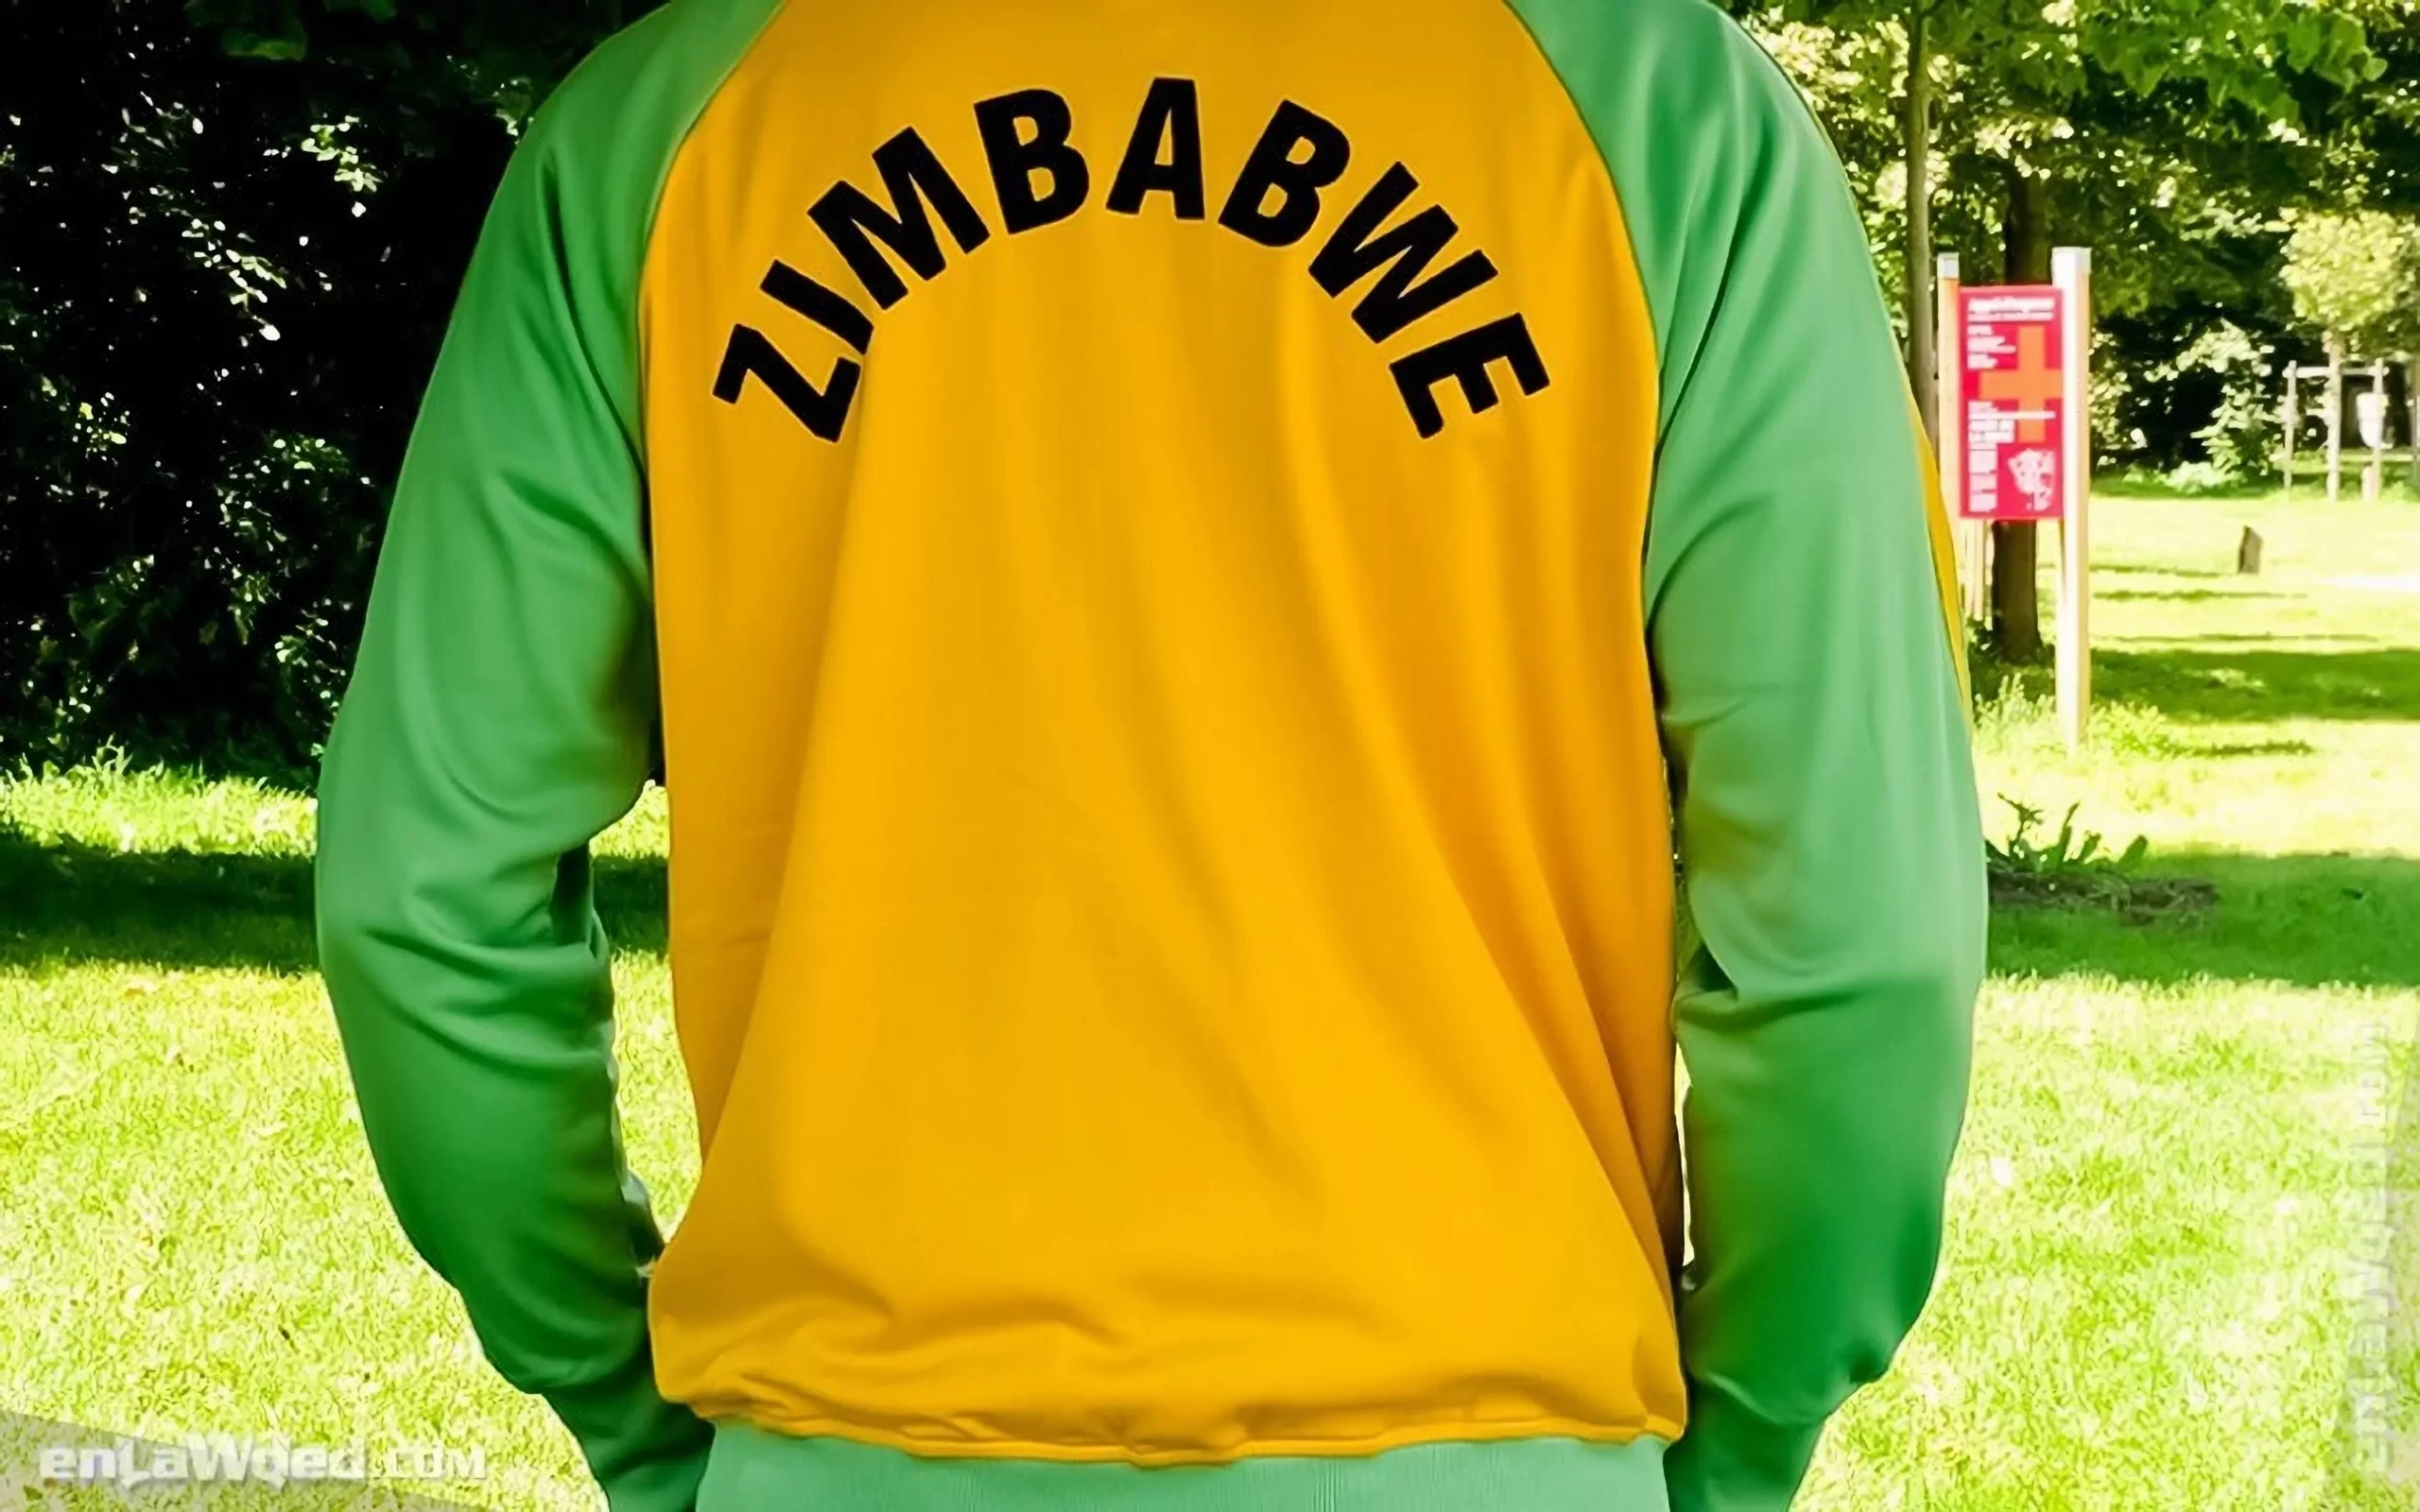 Men’s 2003 Zimbabwe Track Top by Adidas: Indulgence (EnLawded.com file #lmcgznc3252j5k3jhkrh)